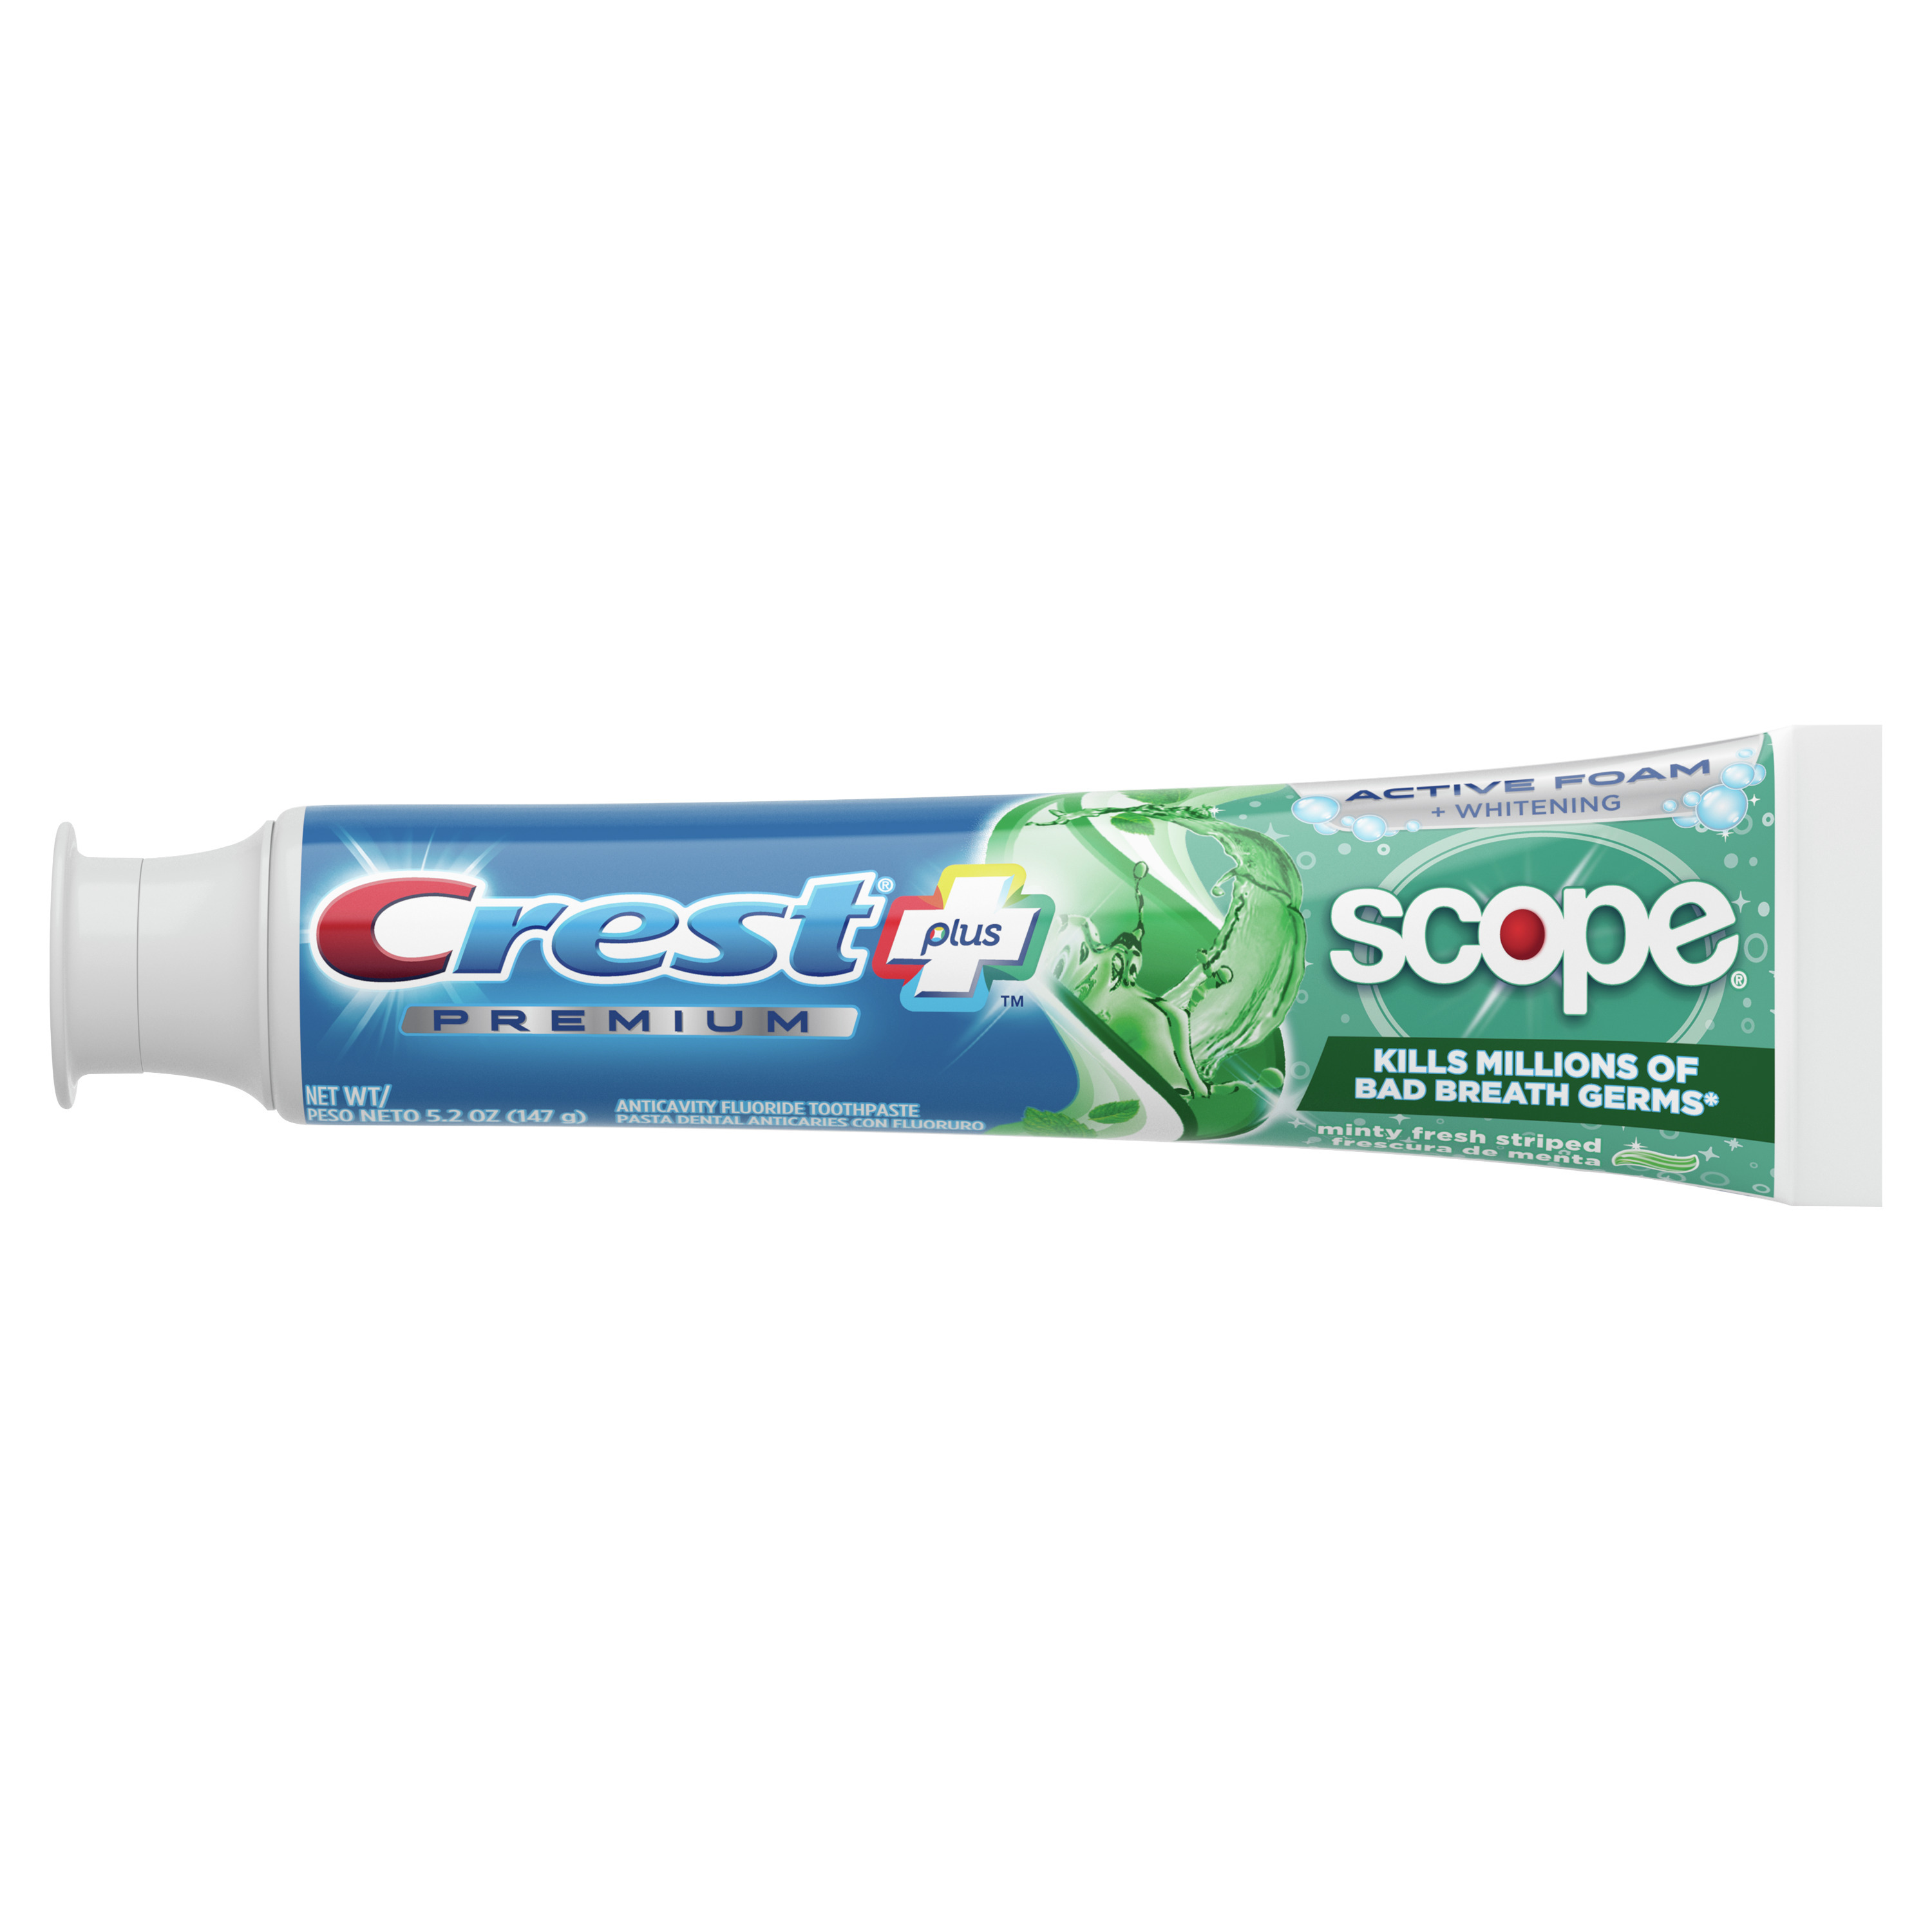 Crest Premium Plus Scope Toothpaste, Minty Fresh Flavor 5.2 oz, 3 Pk - image 9 of 9